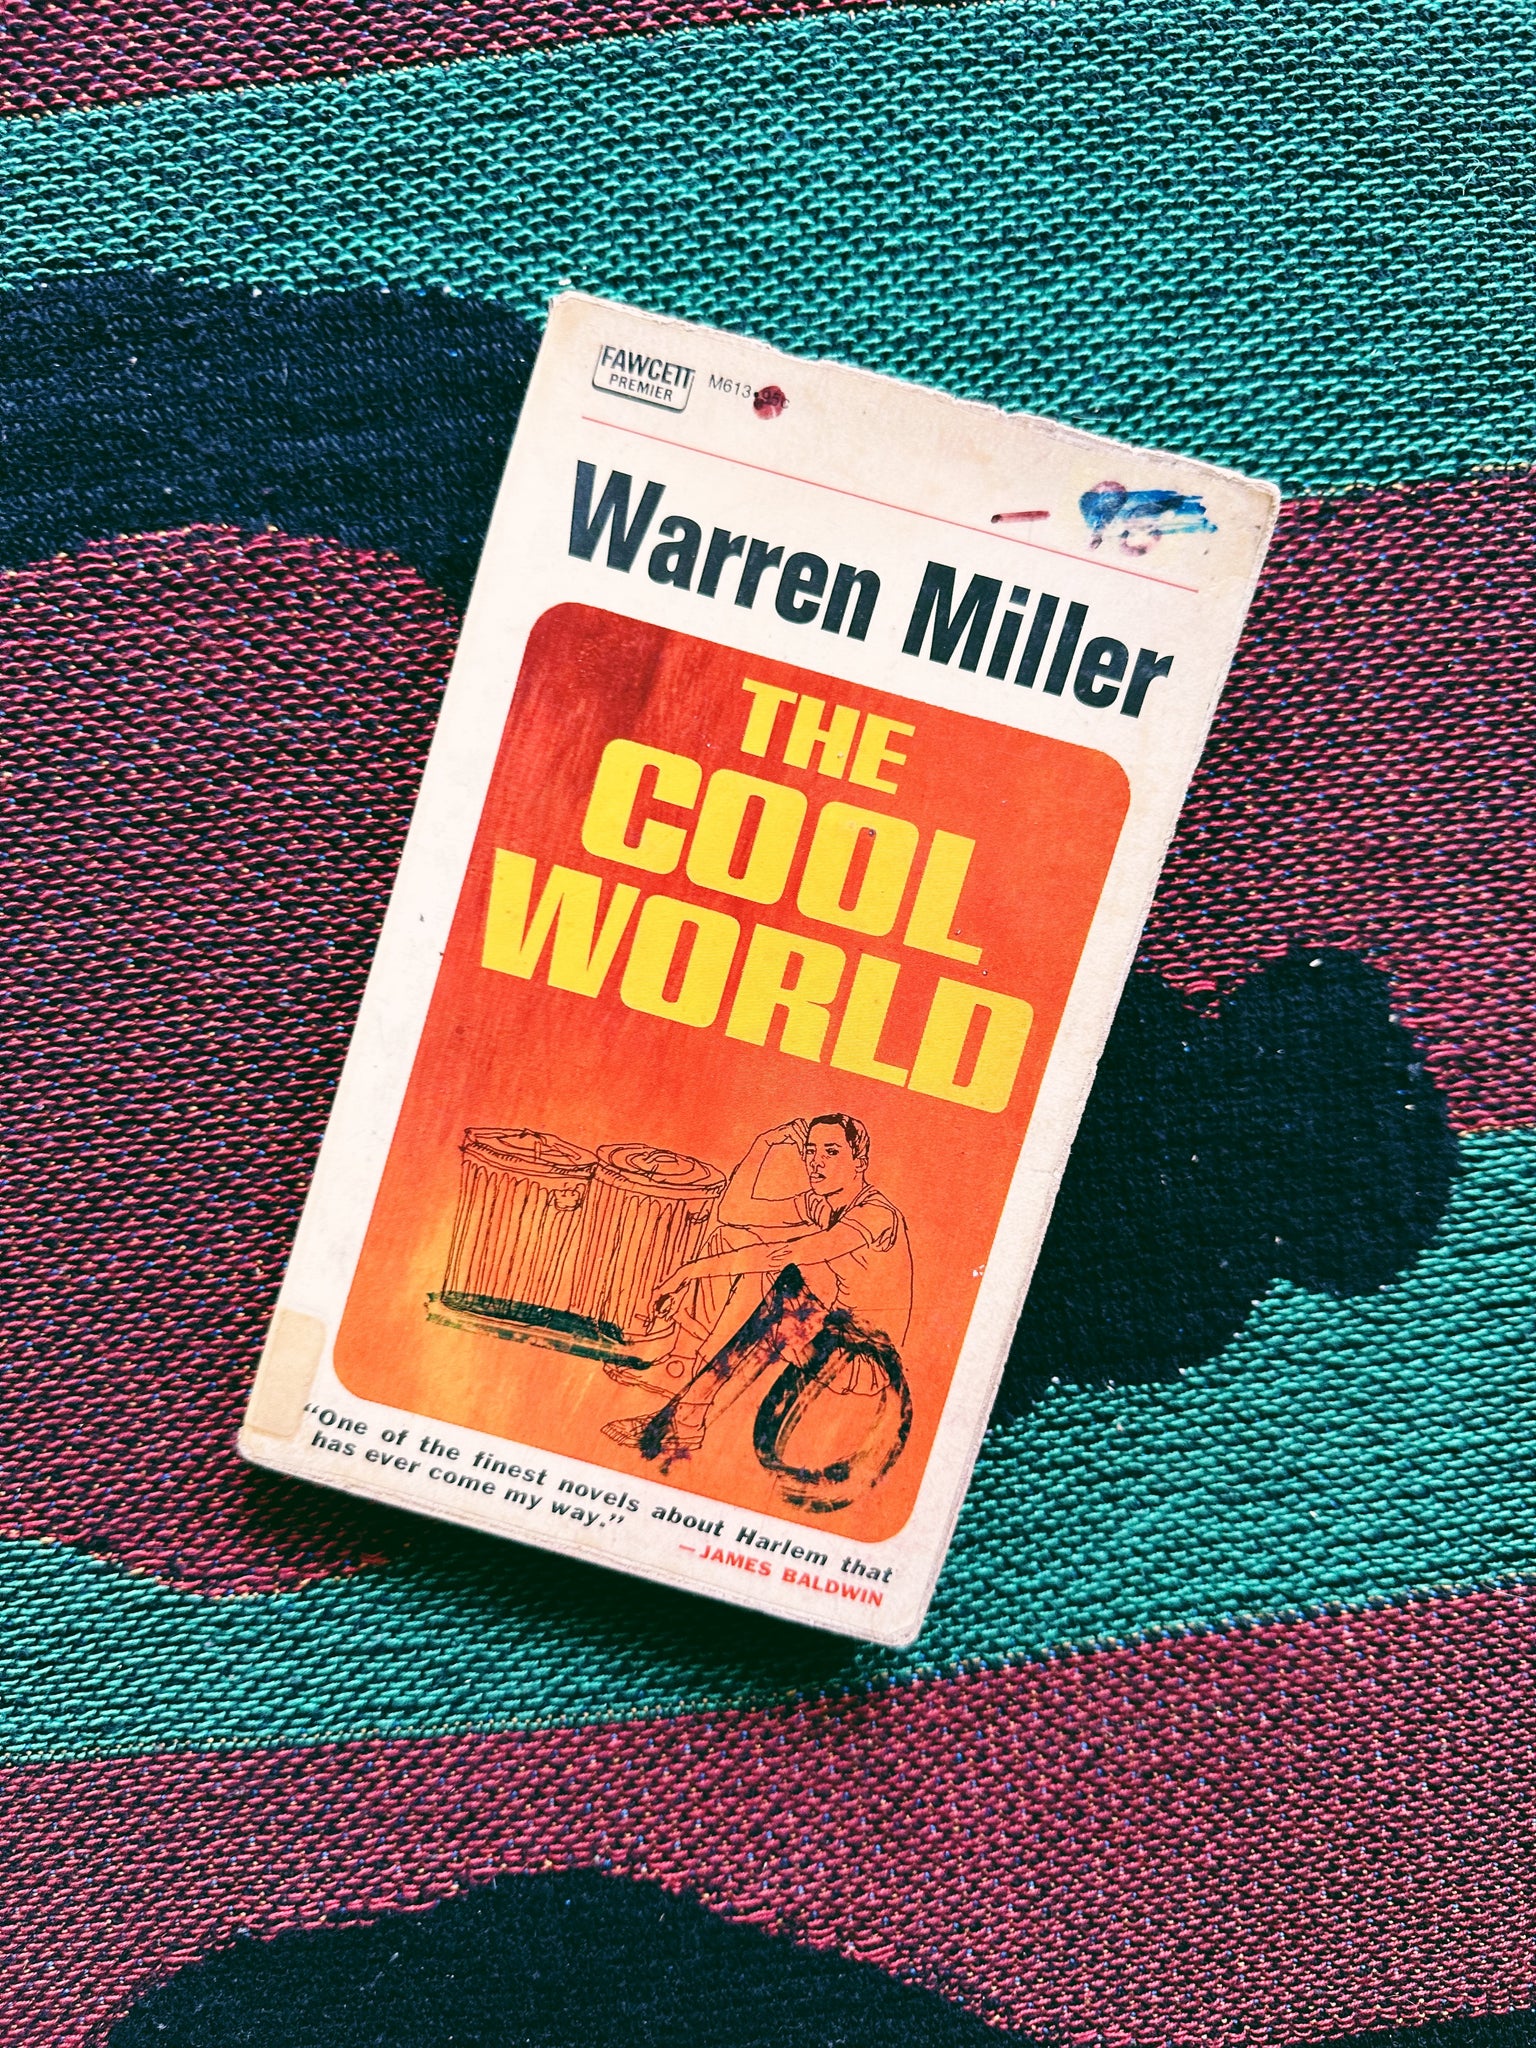 Vintage “The Cool World” by Warren Miller (1959)